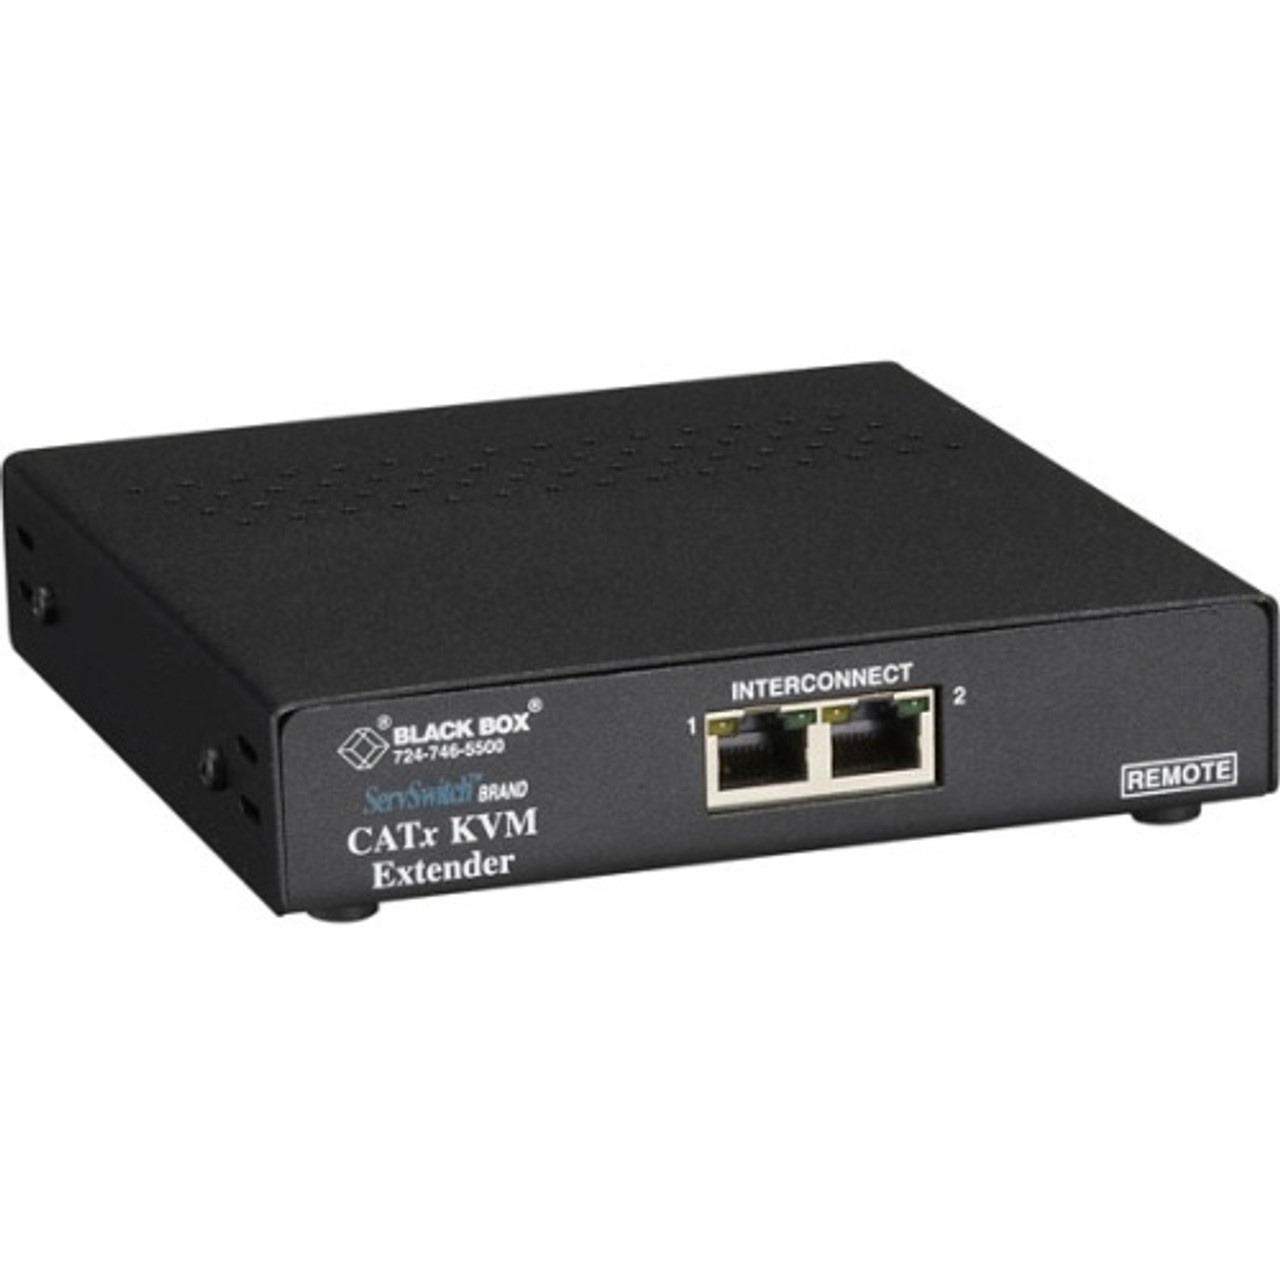 ACUR002A Black Box ServSwitch CATx Dual Video KVM Extender Standalone Remote Unit